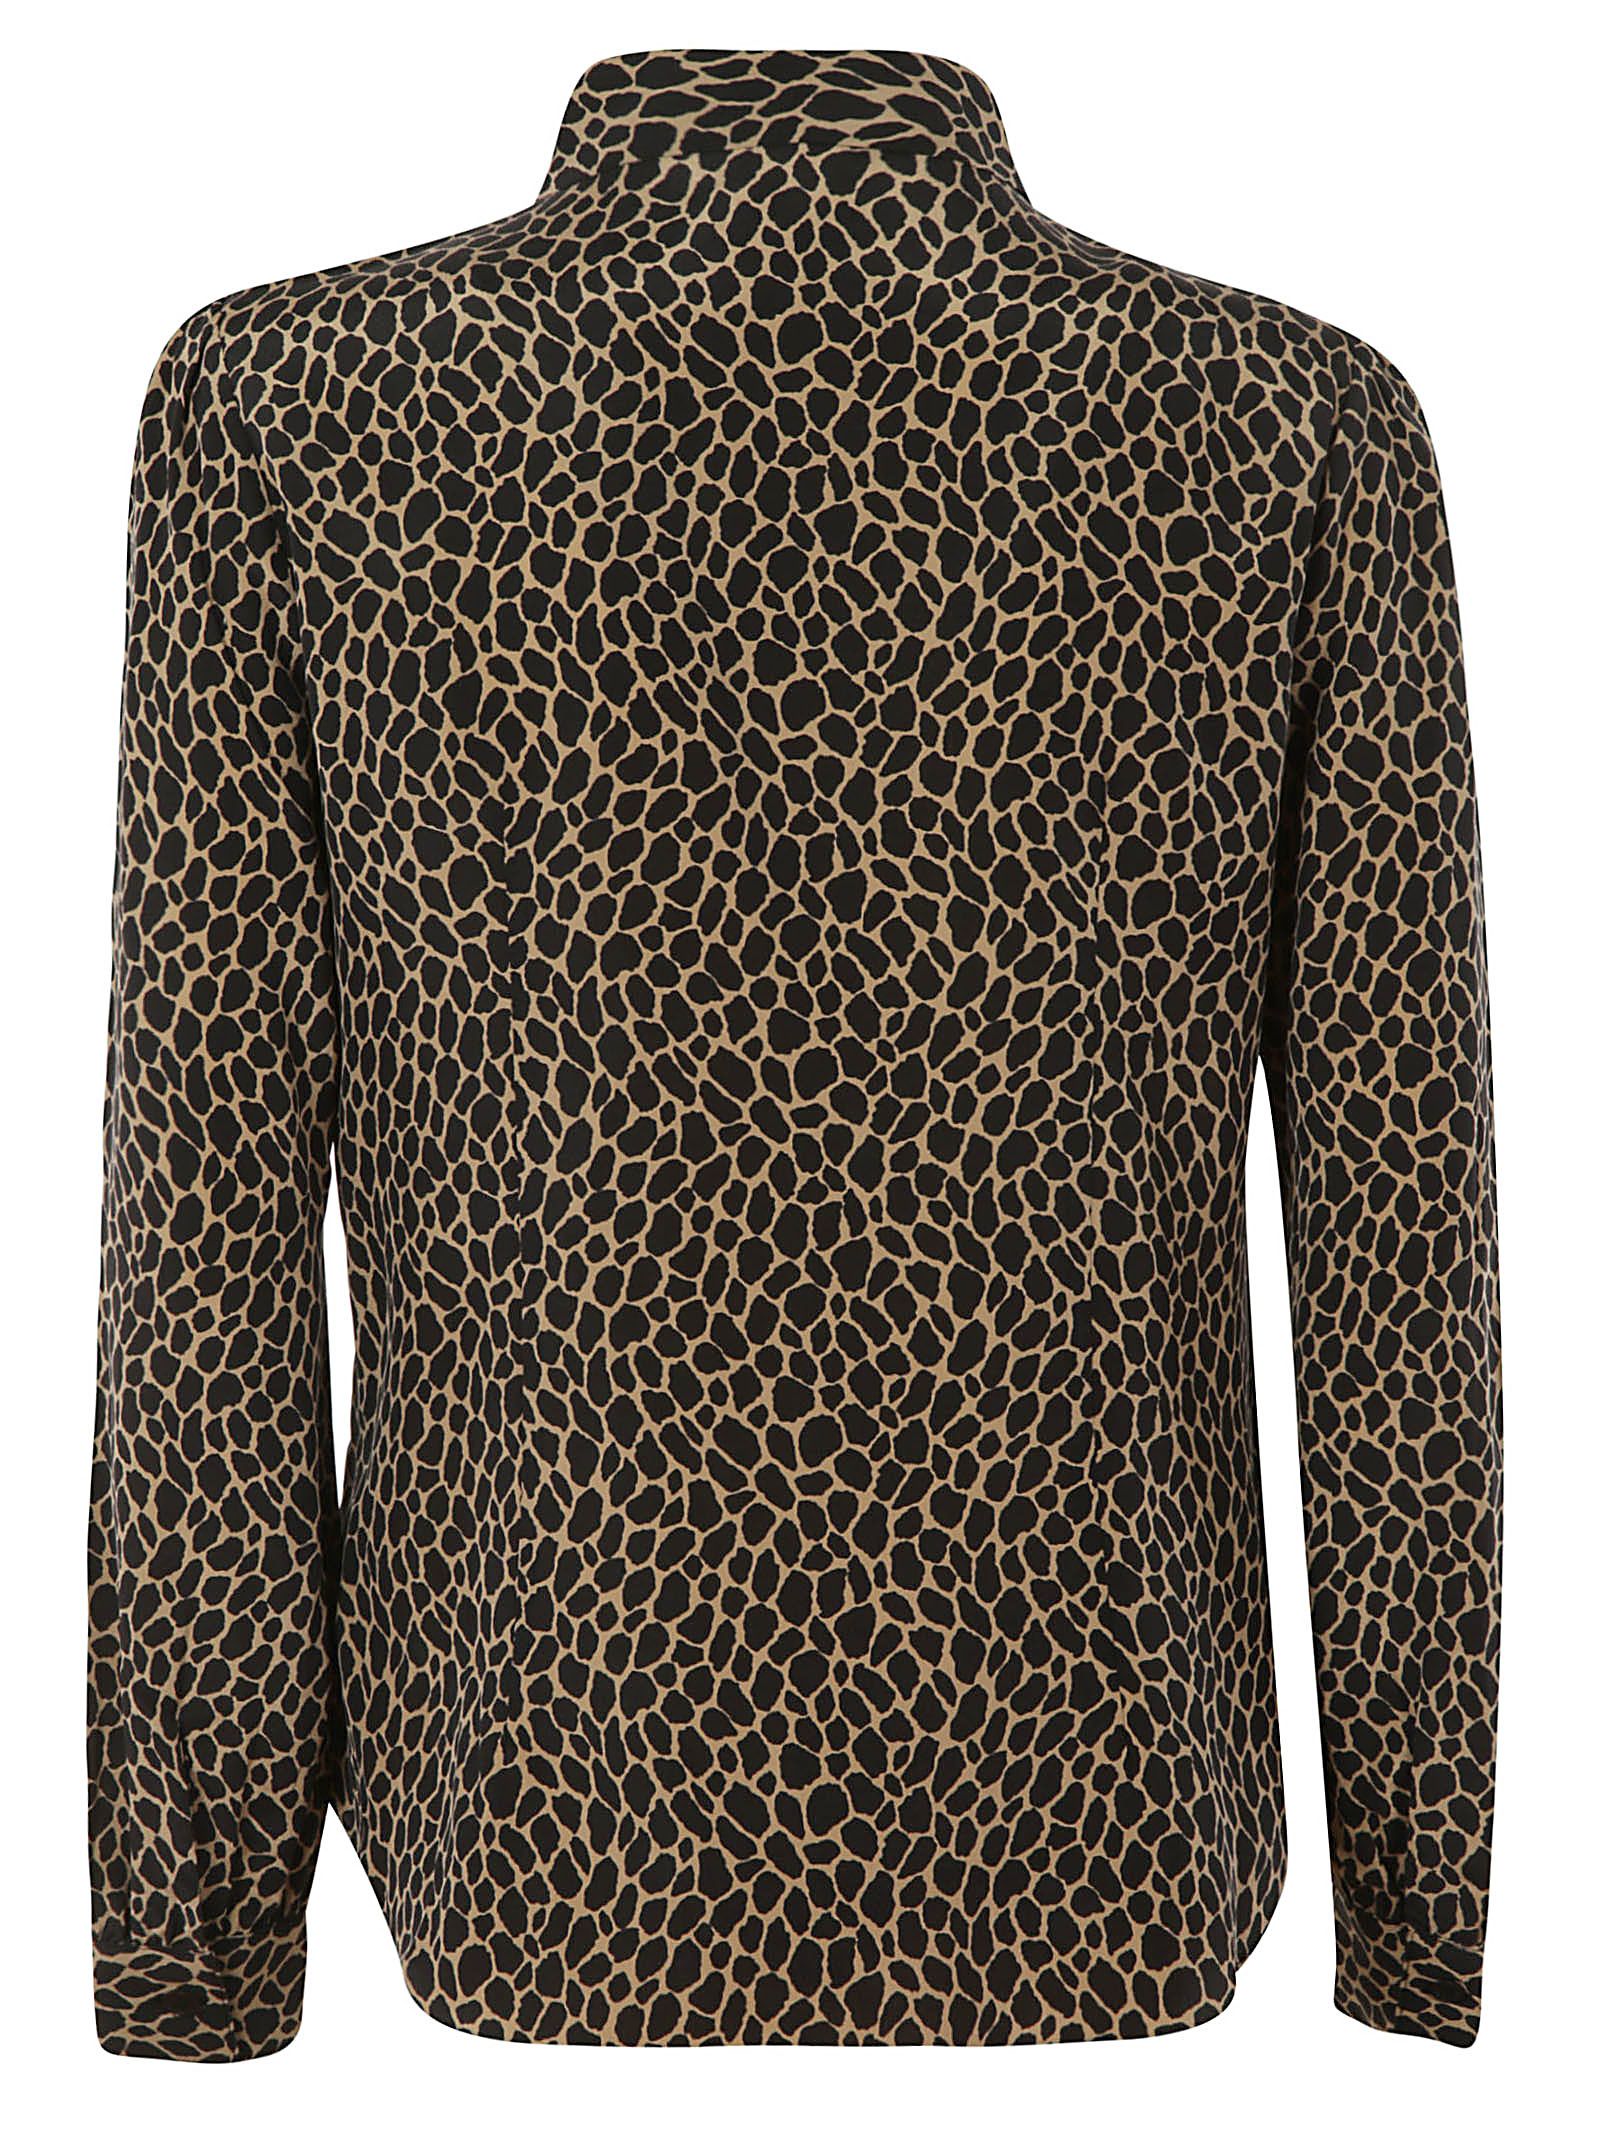 Michael Kors Michael Kors Leopard Print Fitted Shirt - Brown/Black ...